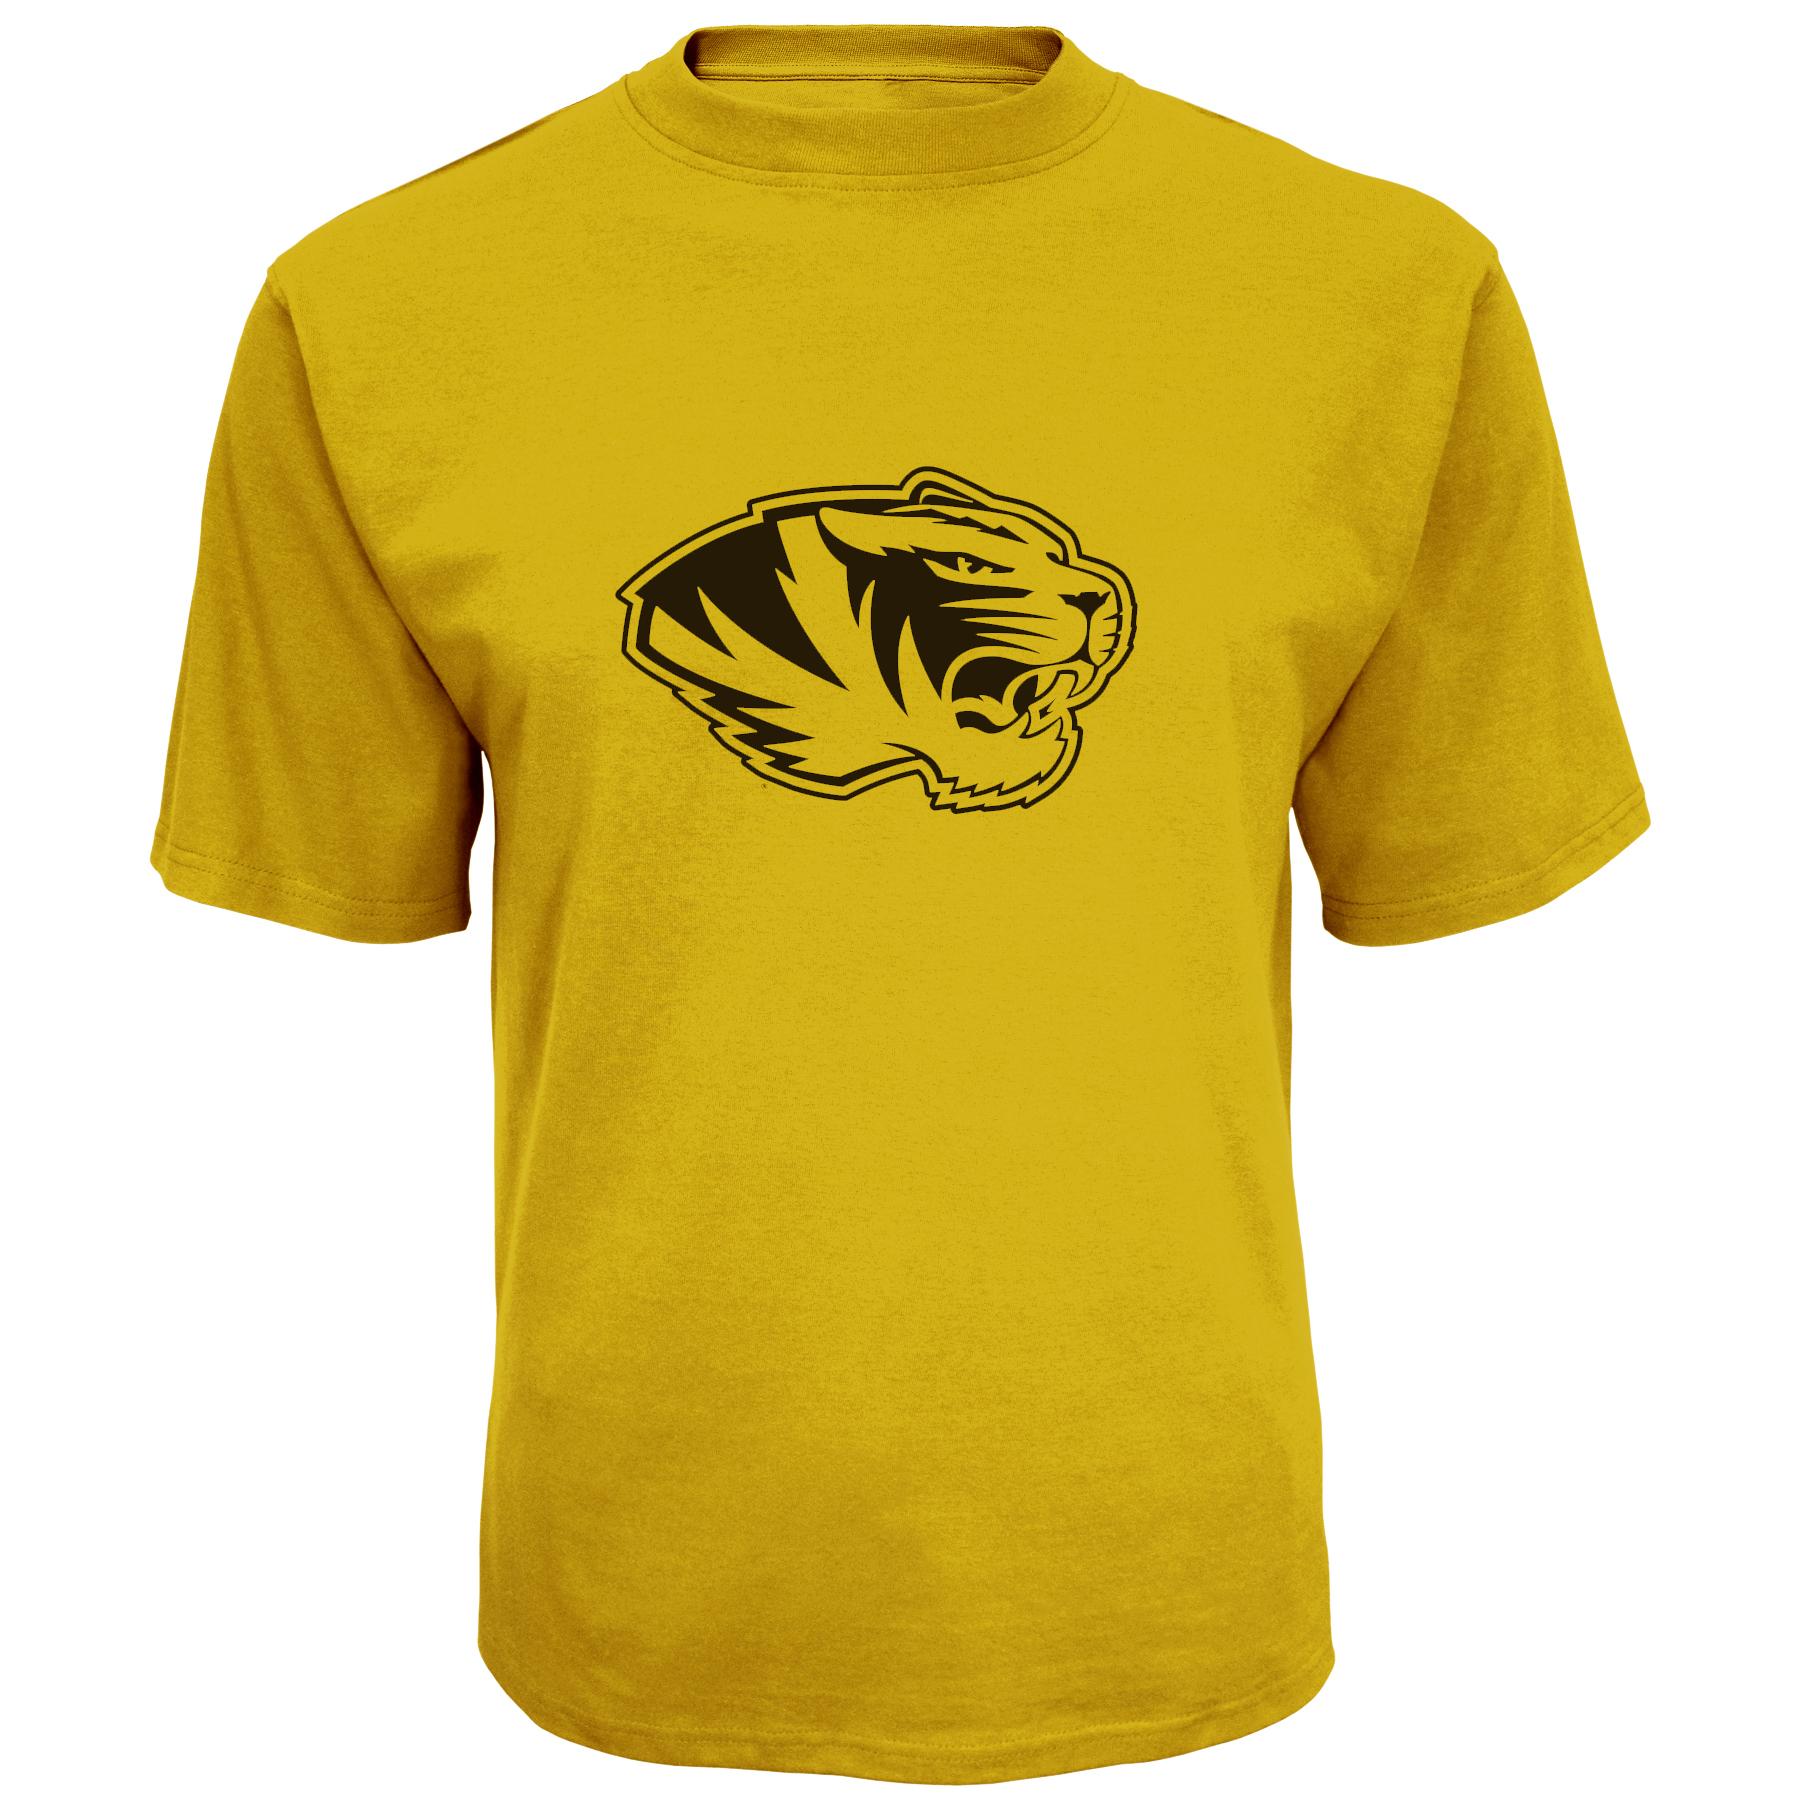 NCAA Men's Graphic T-Shirt - Missouri Tigers